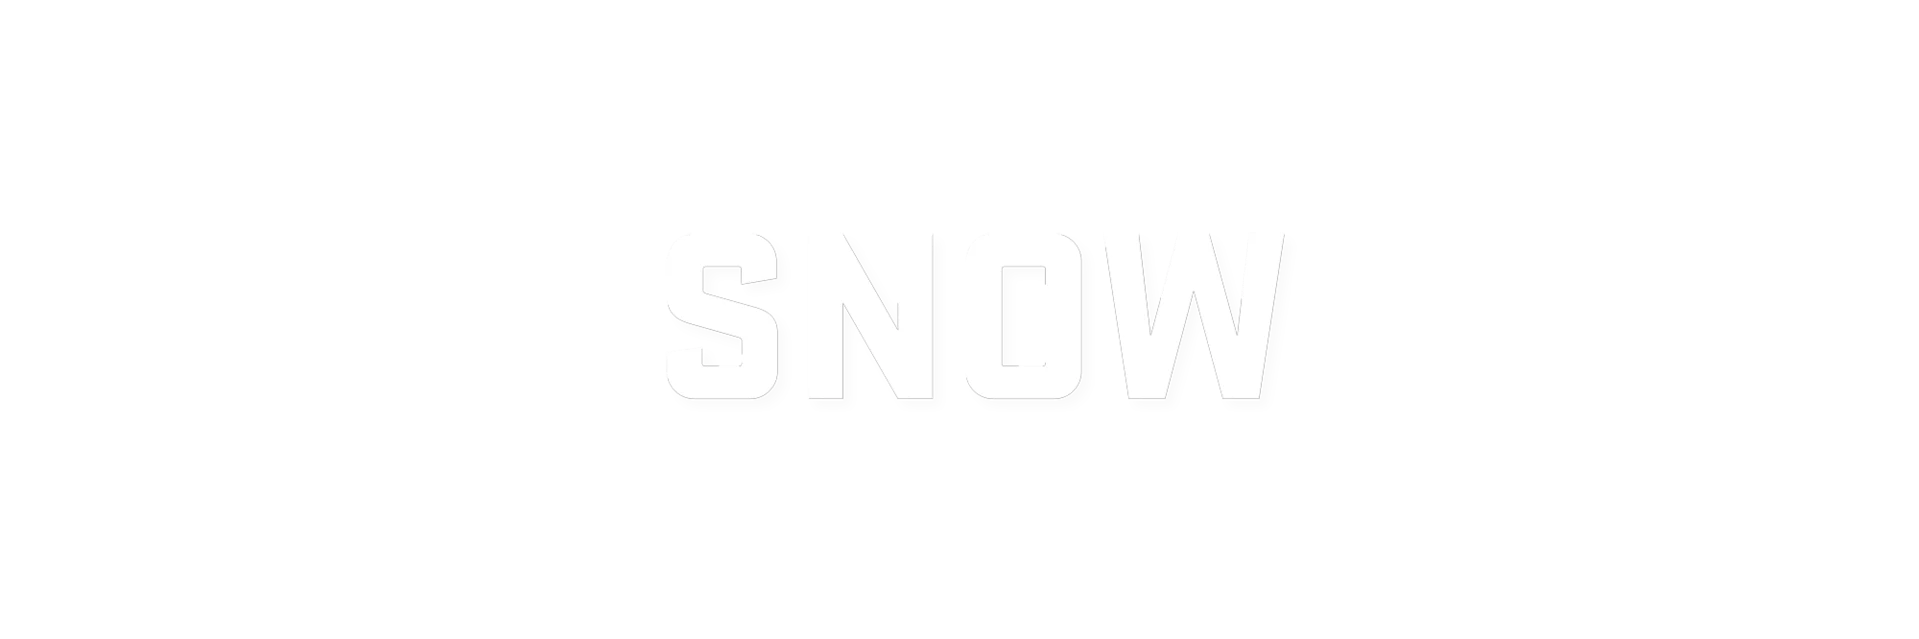 Snow Sports  Header Image Text Overlay